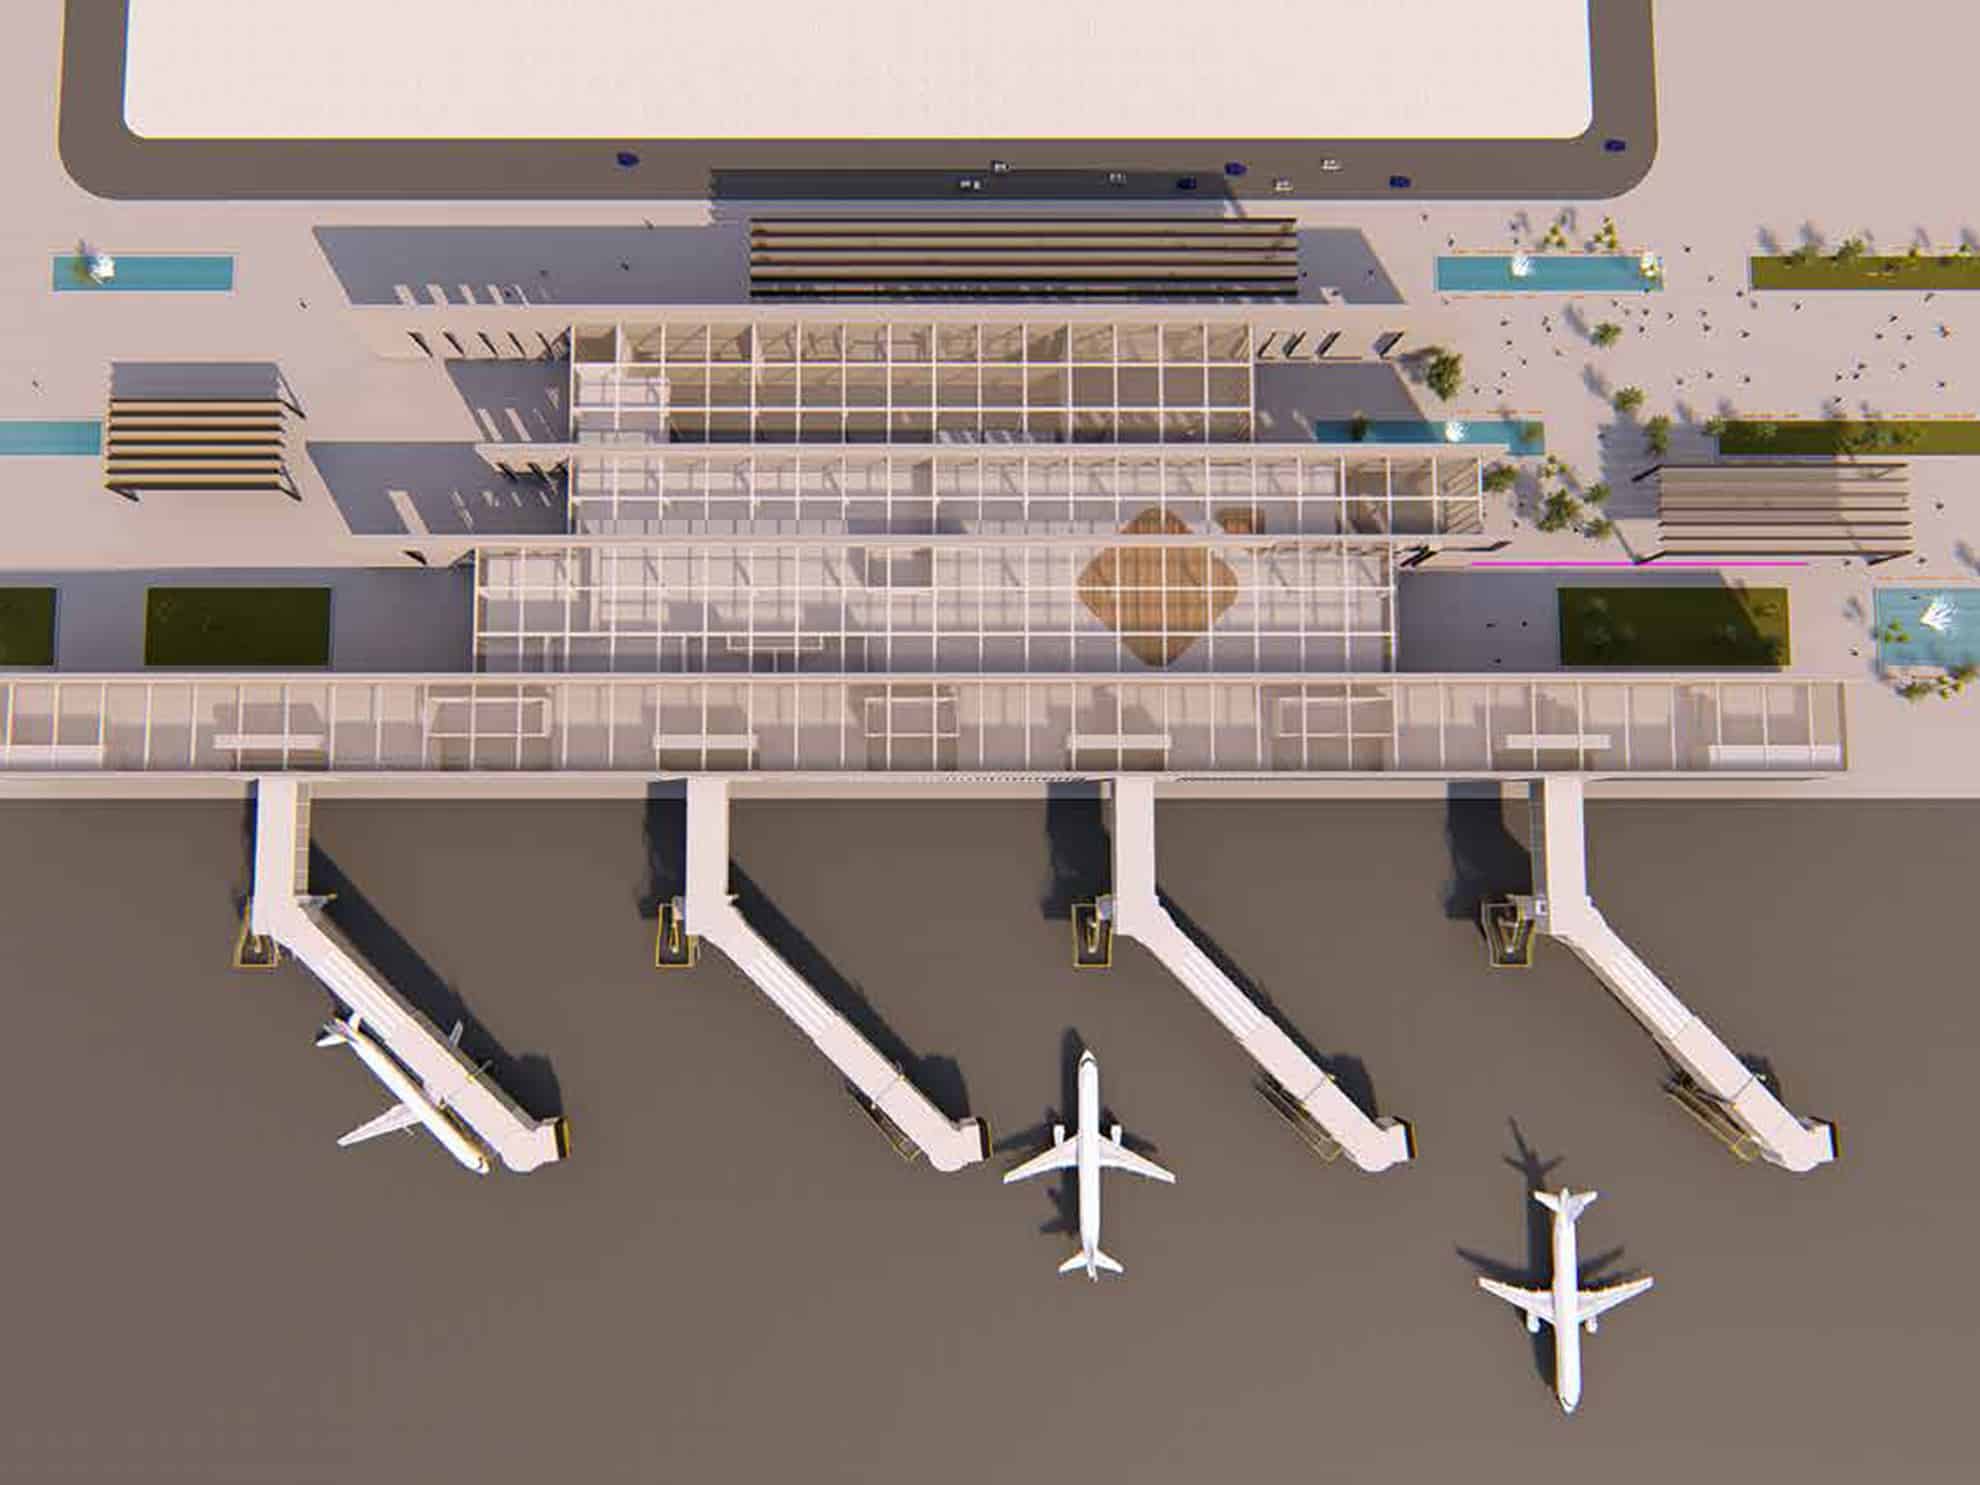 Karbala International Airport CGI